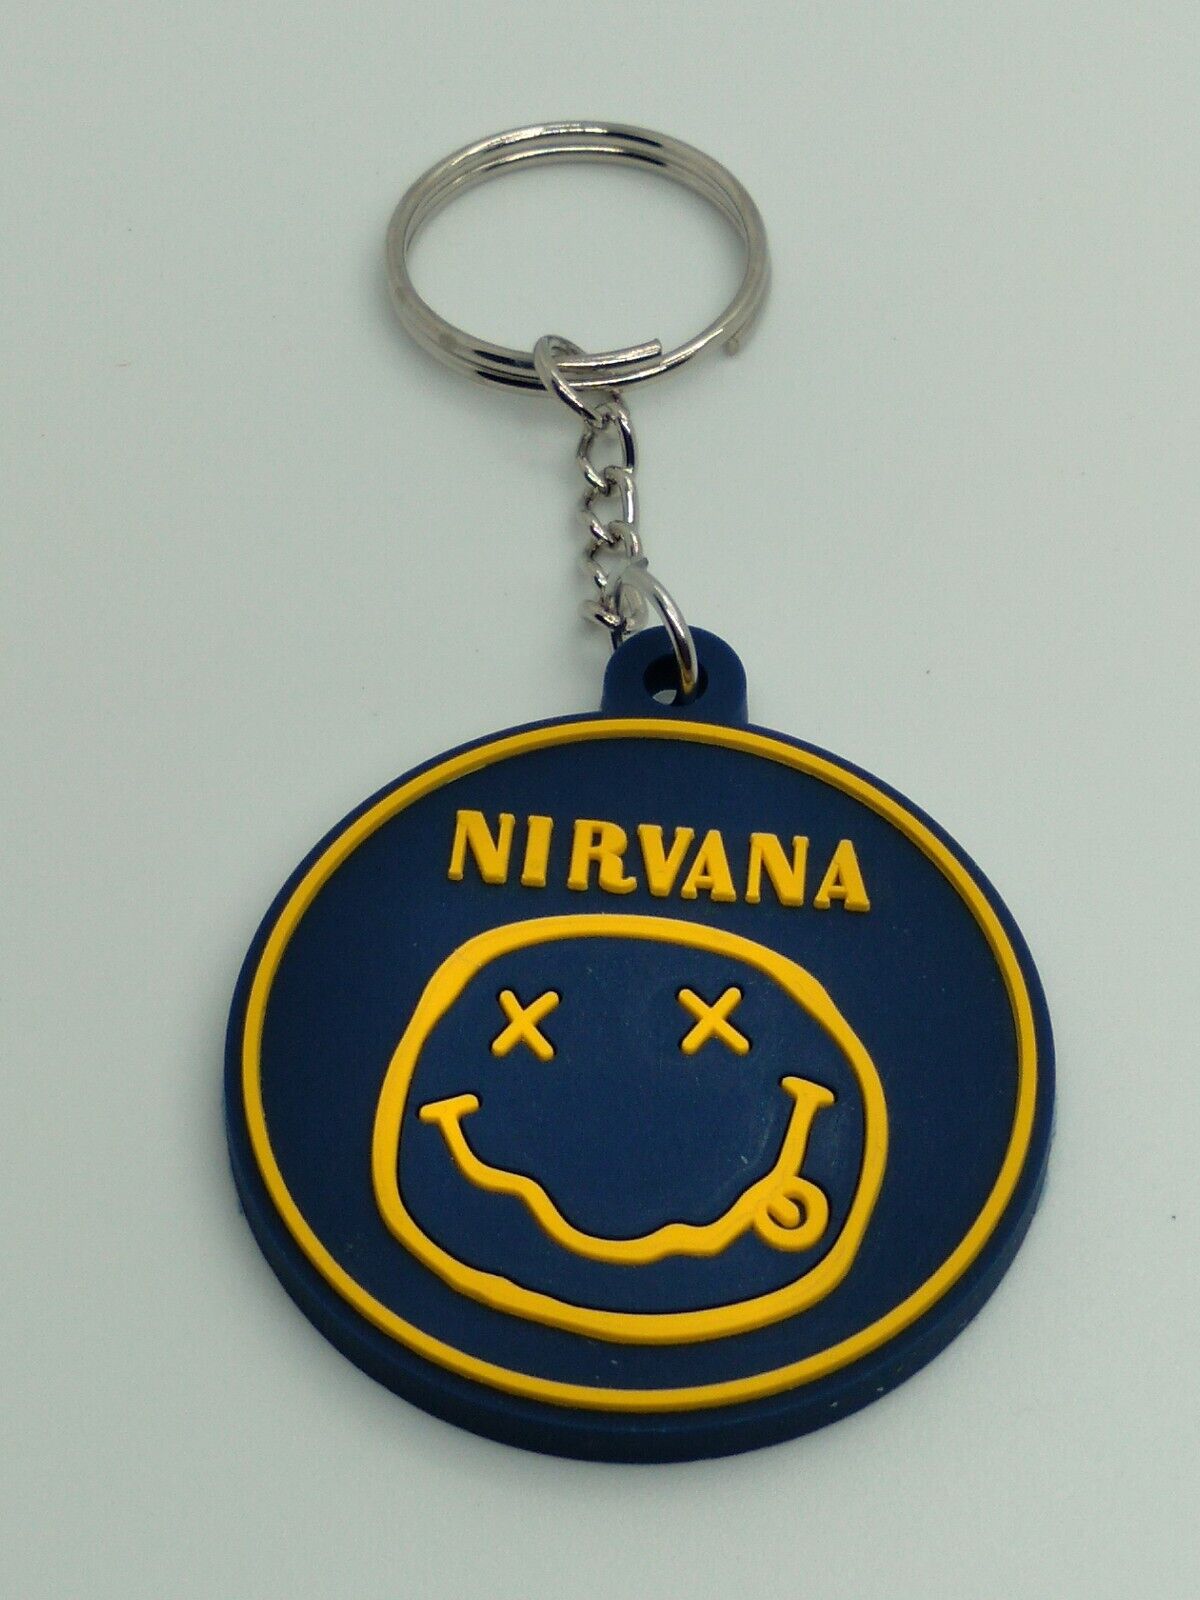 Nirvana Rubber Figure Keychain Strap Punk Rock N Roll Music Advertising Promo